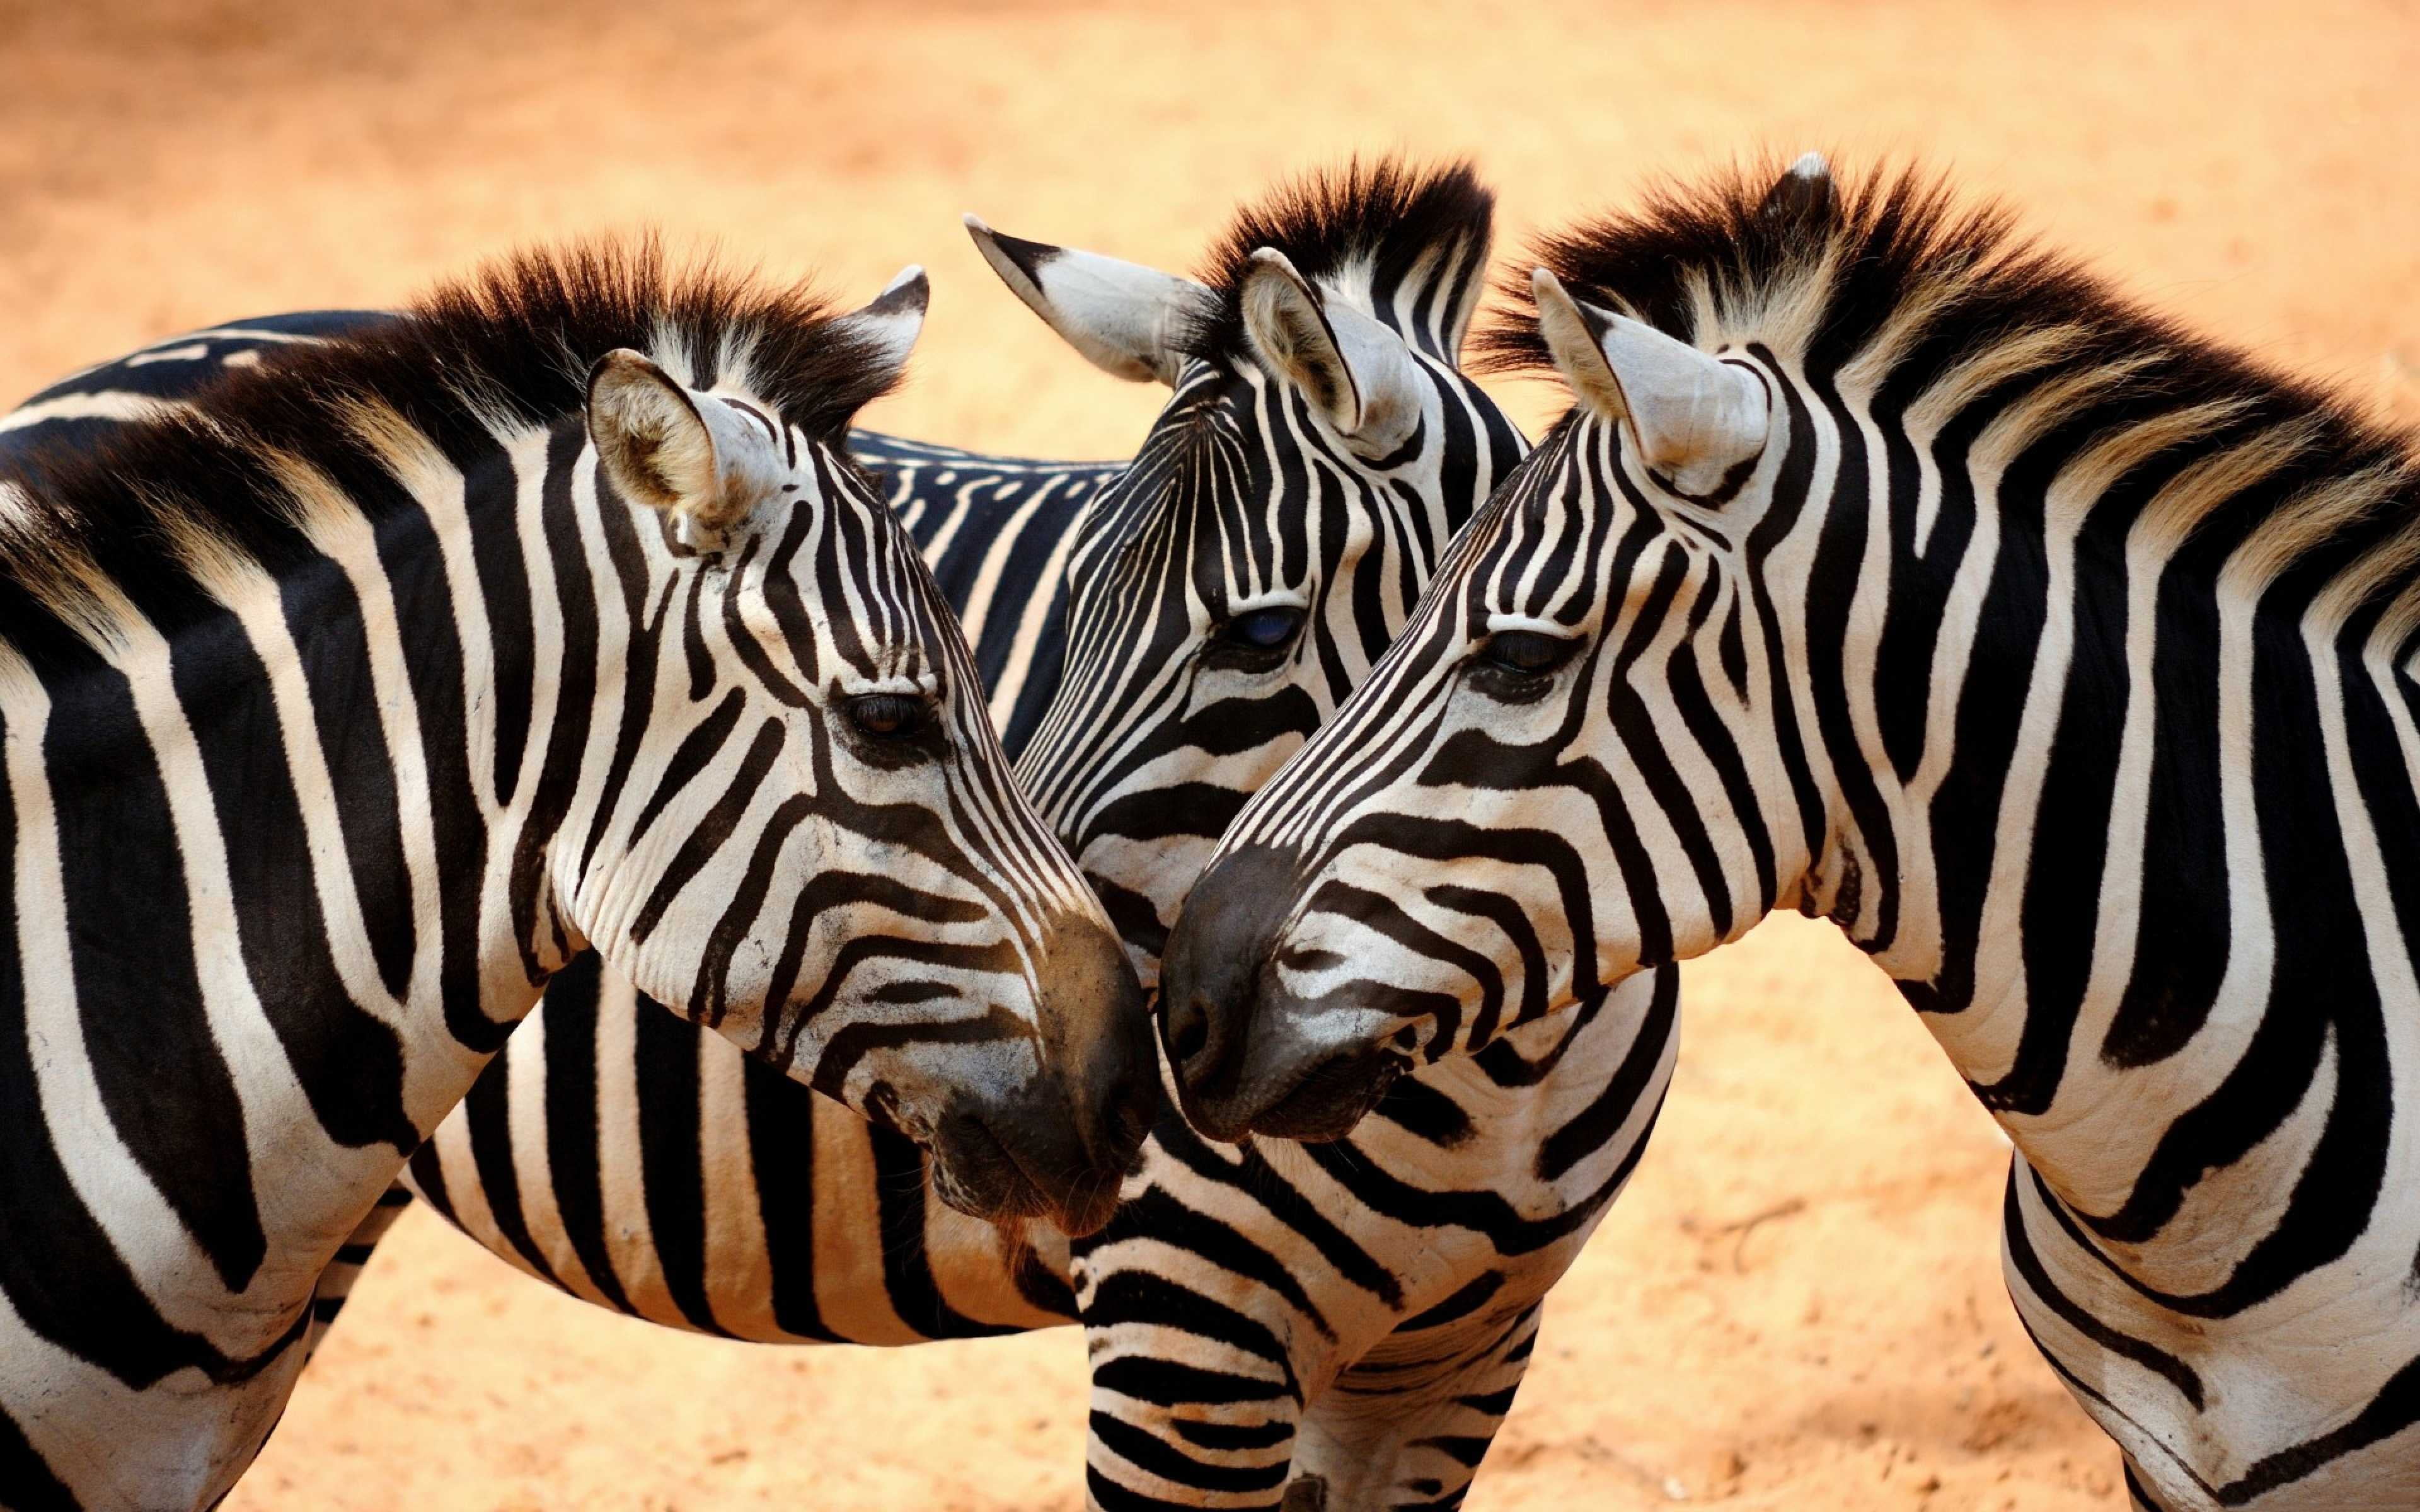 African Zebras-Desktop HD Wallpaper for Mobile phones-Tablet and PC-3840×2400